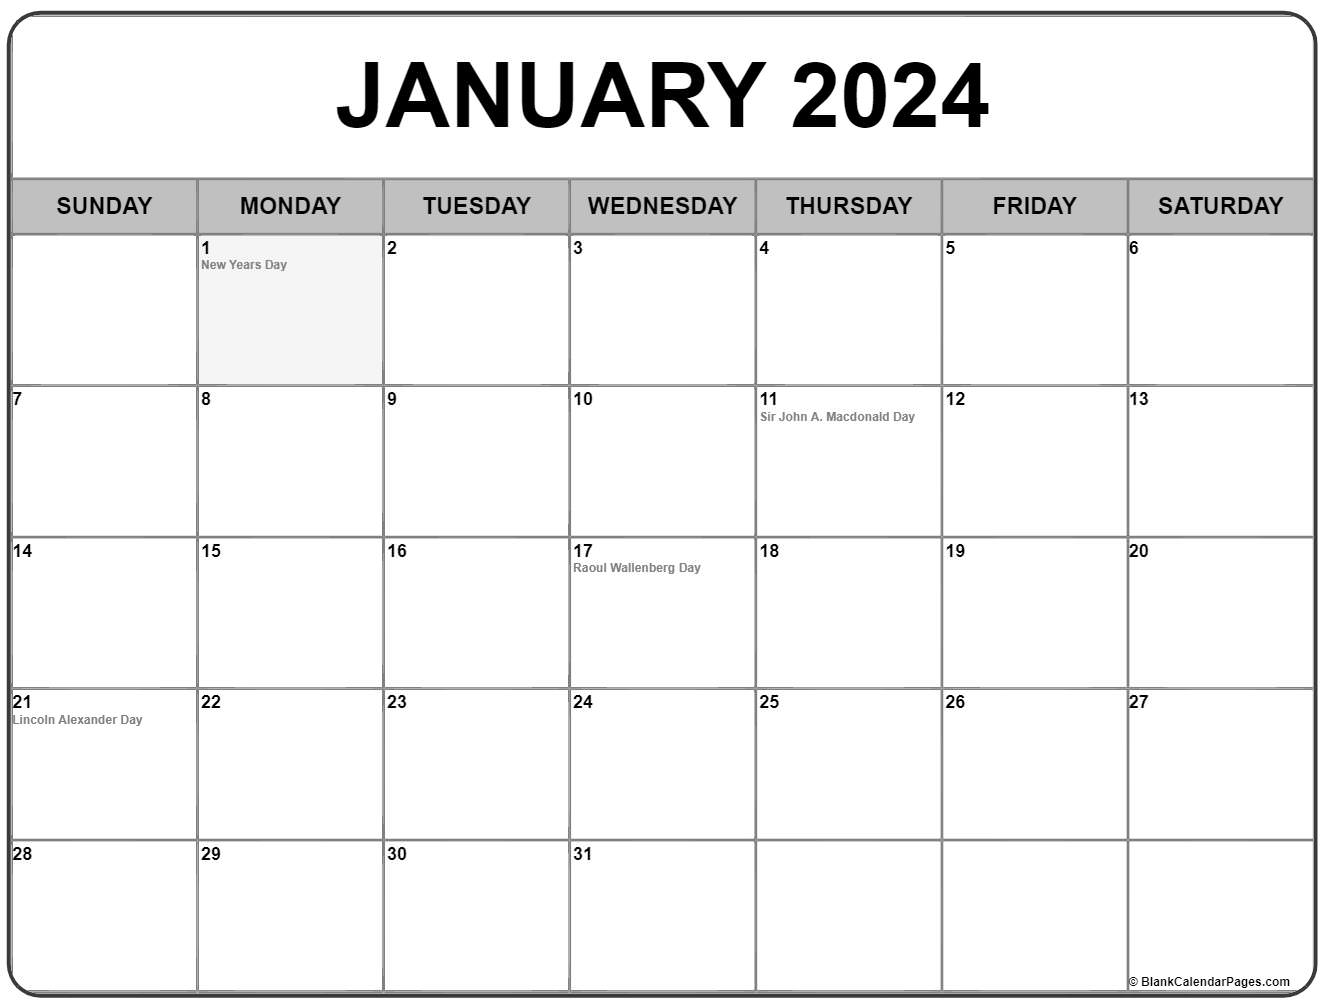 january-2024-calendar-printable-calendar